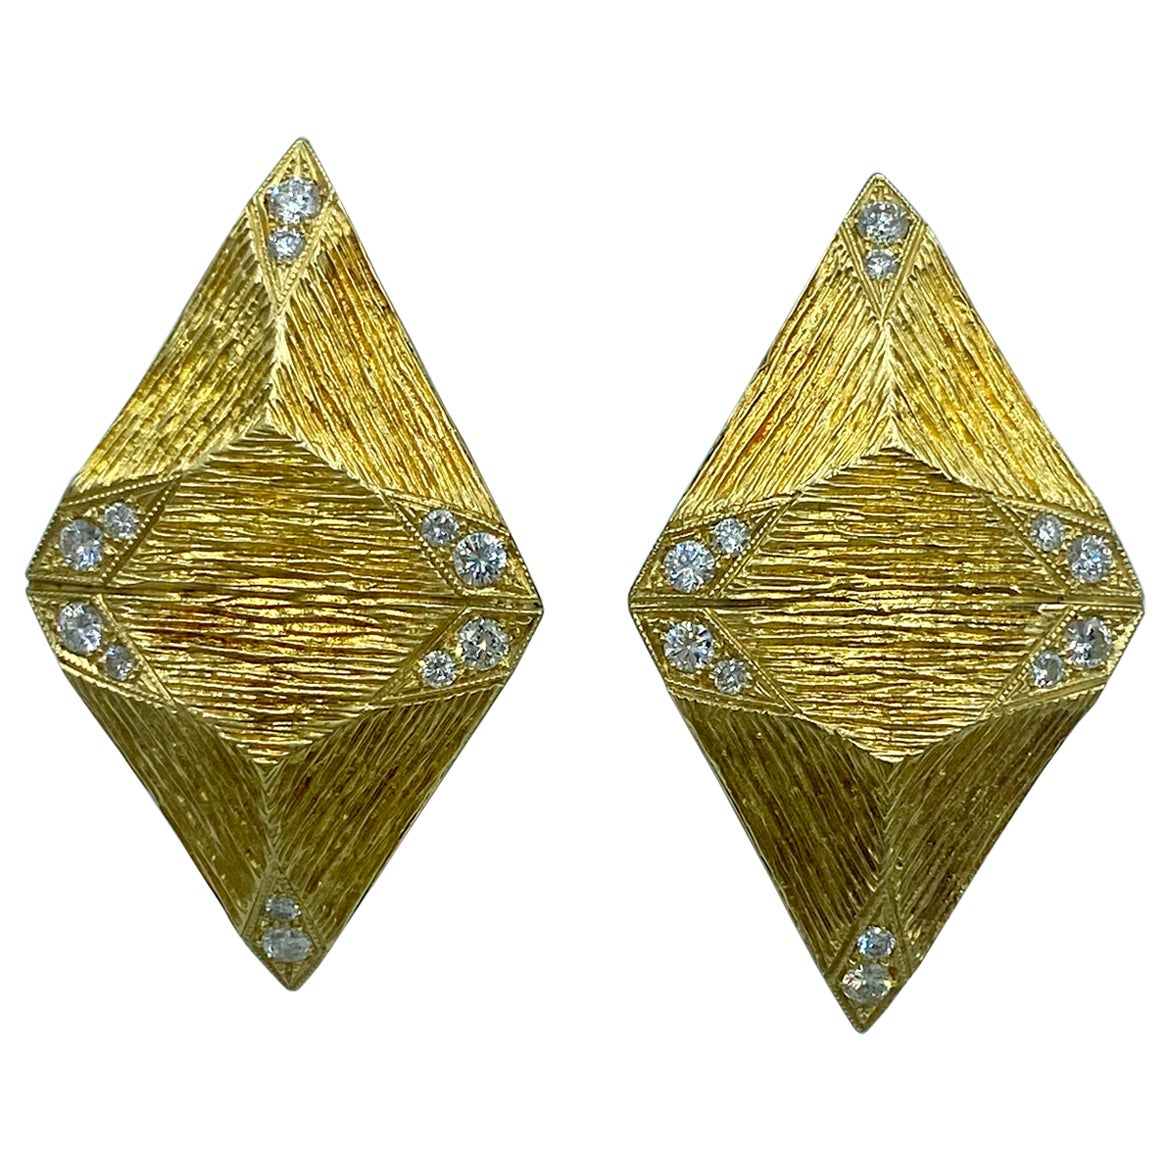 European 1970s hand engraved 18k gold and diamond earrings